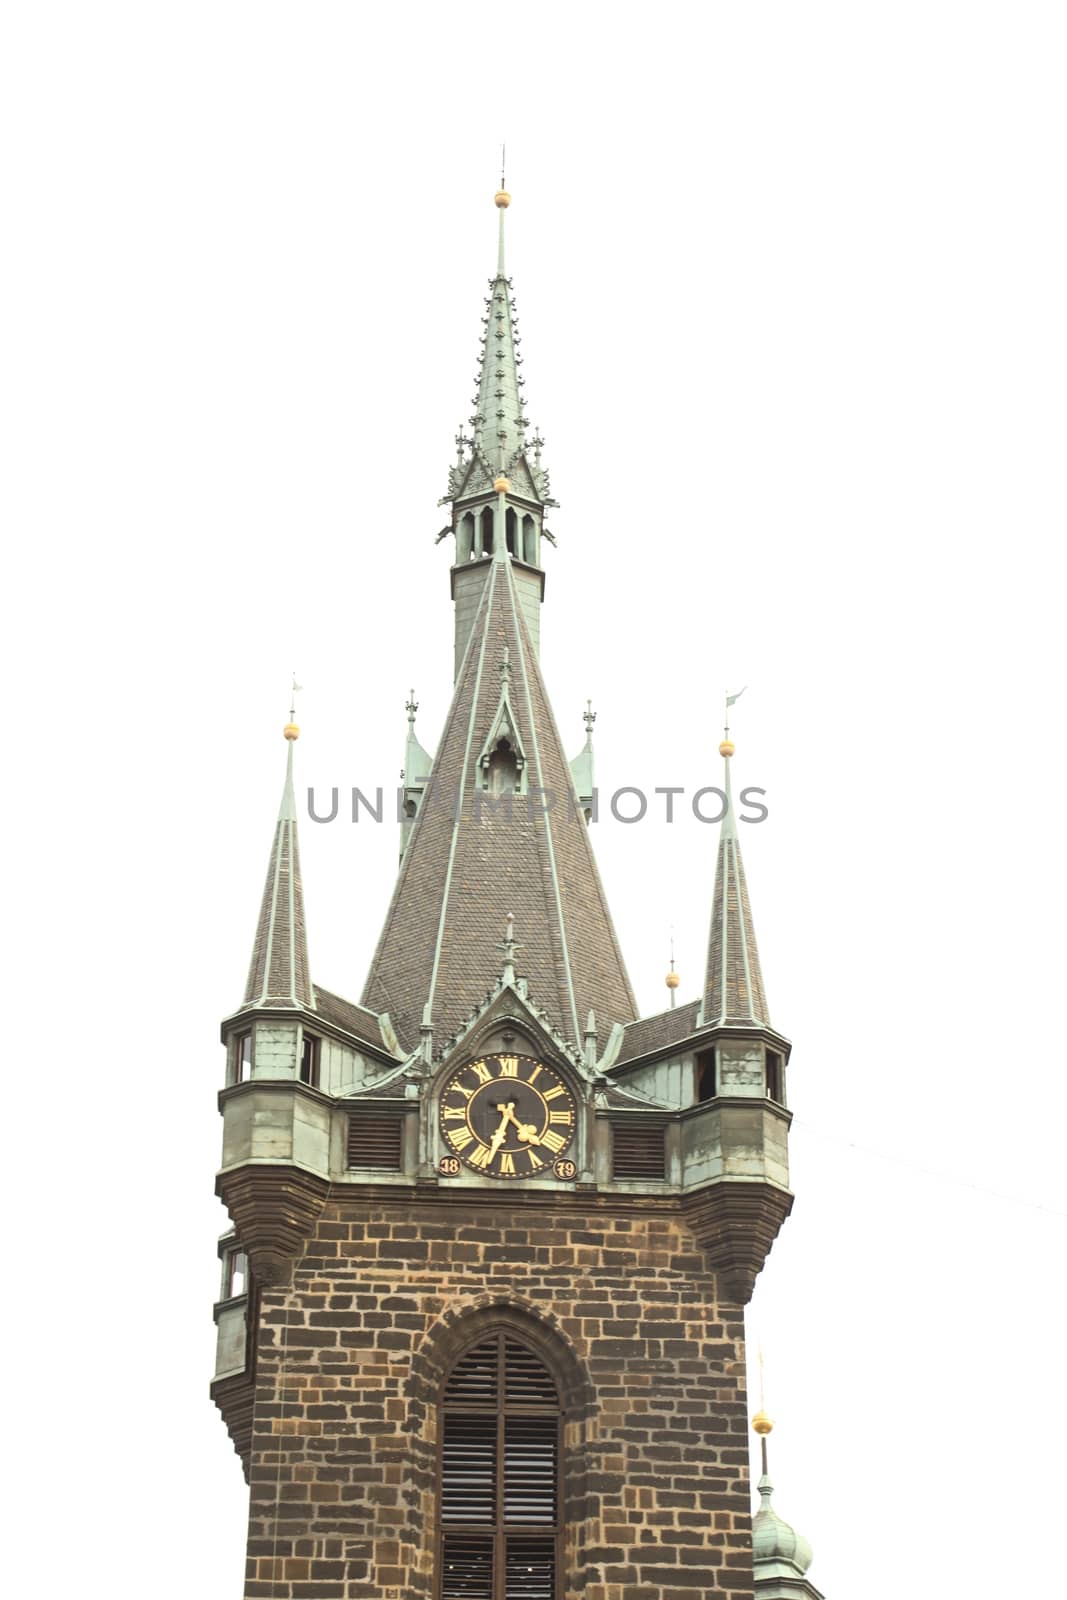 Old Building Prague Europe by rajastills